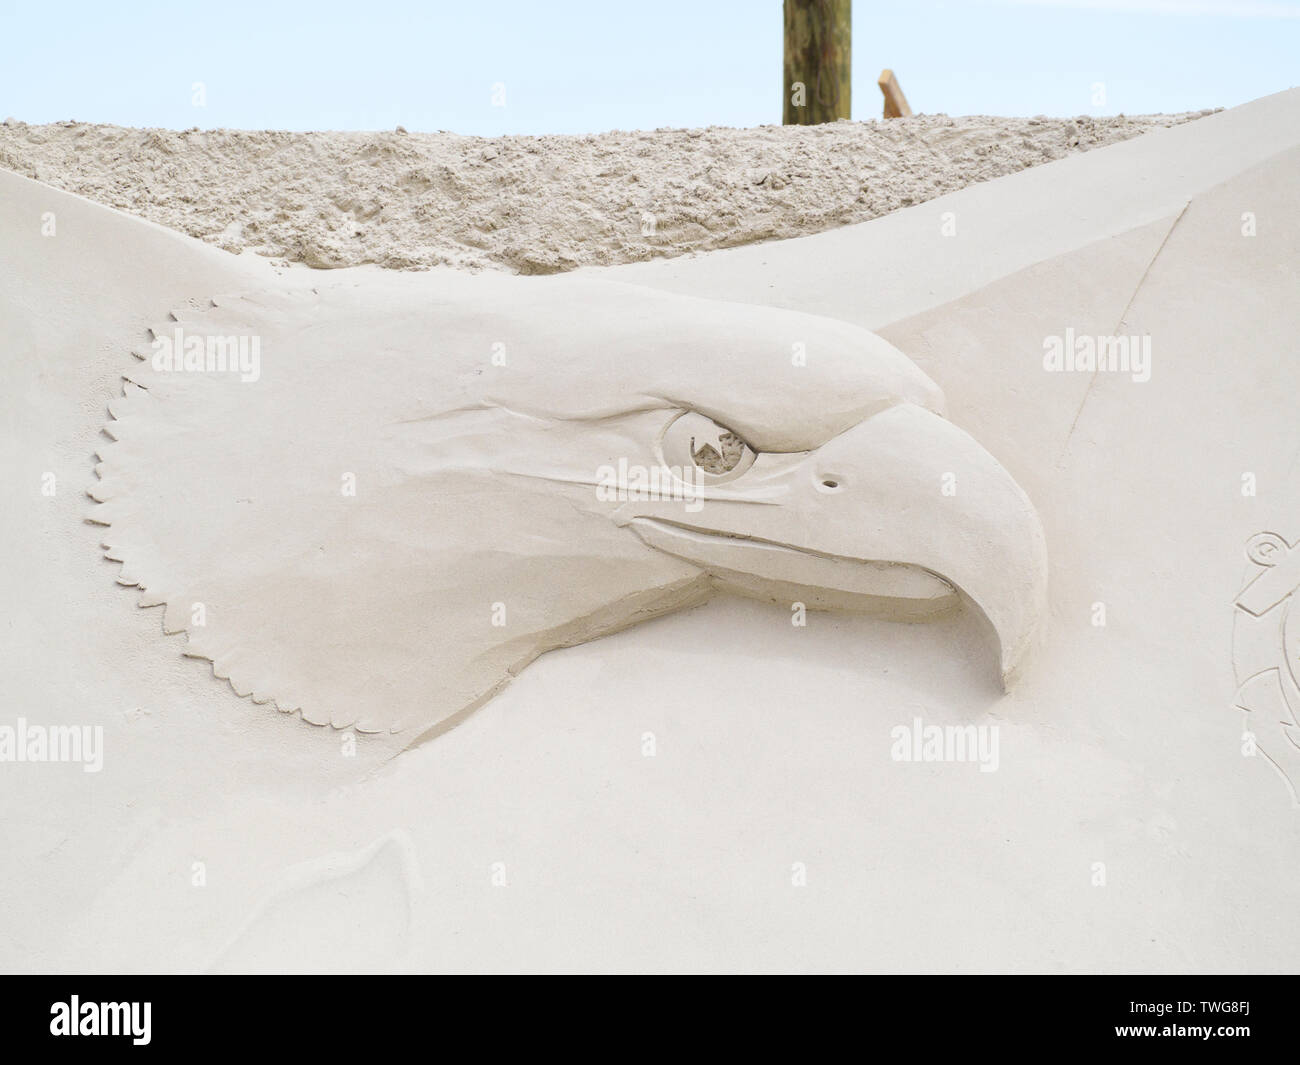 United States Marine Corps Eagle sculpted in sand, closeup. Texas Sandfest 2019 in Port Aransas, Texas USA. Stock Photo